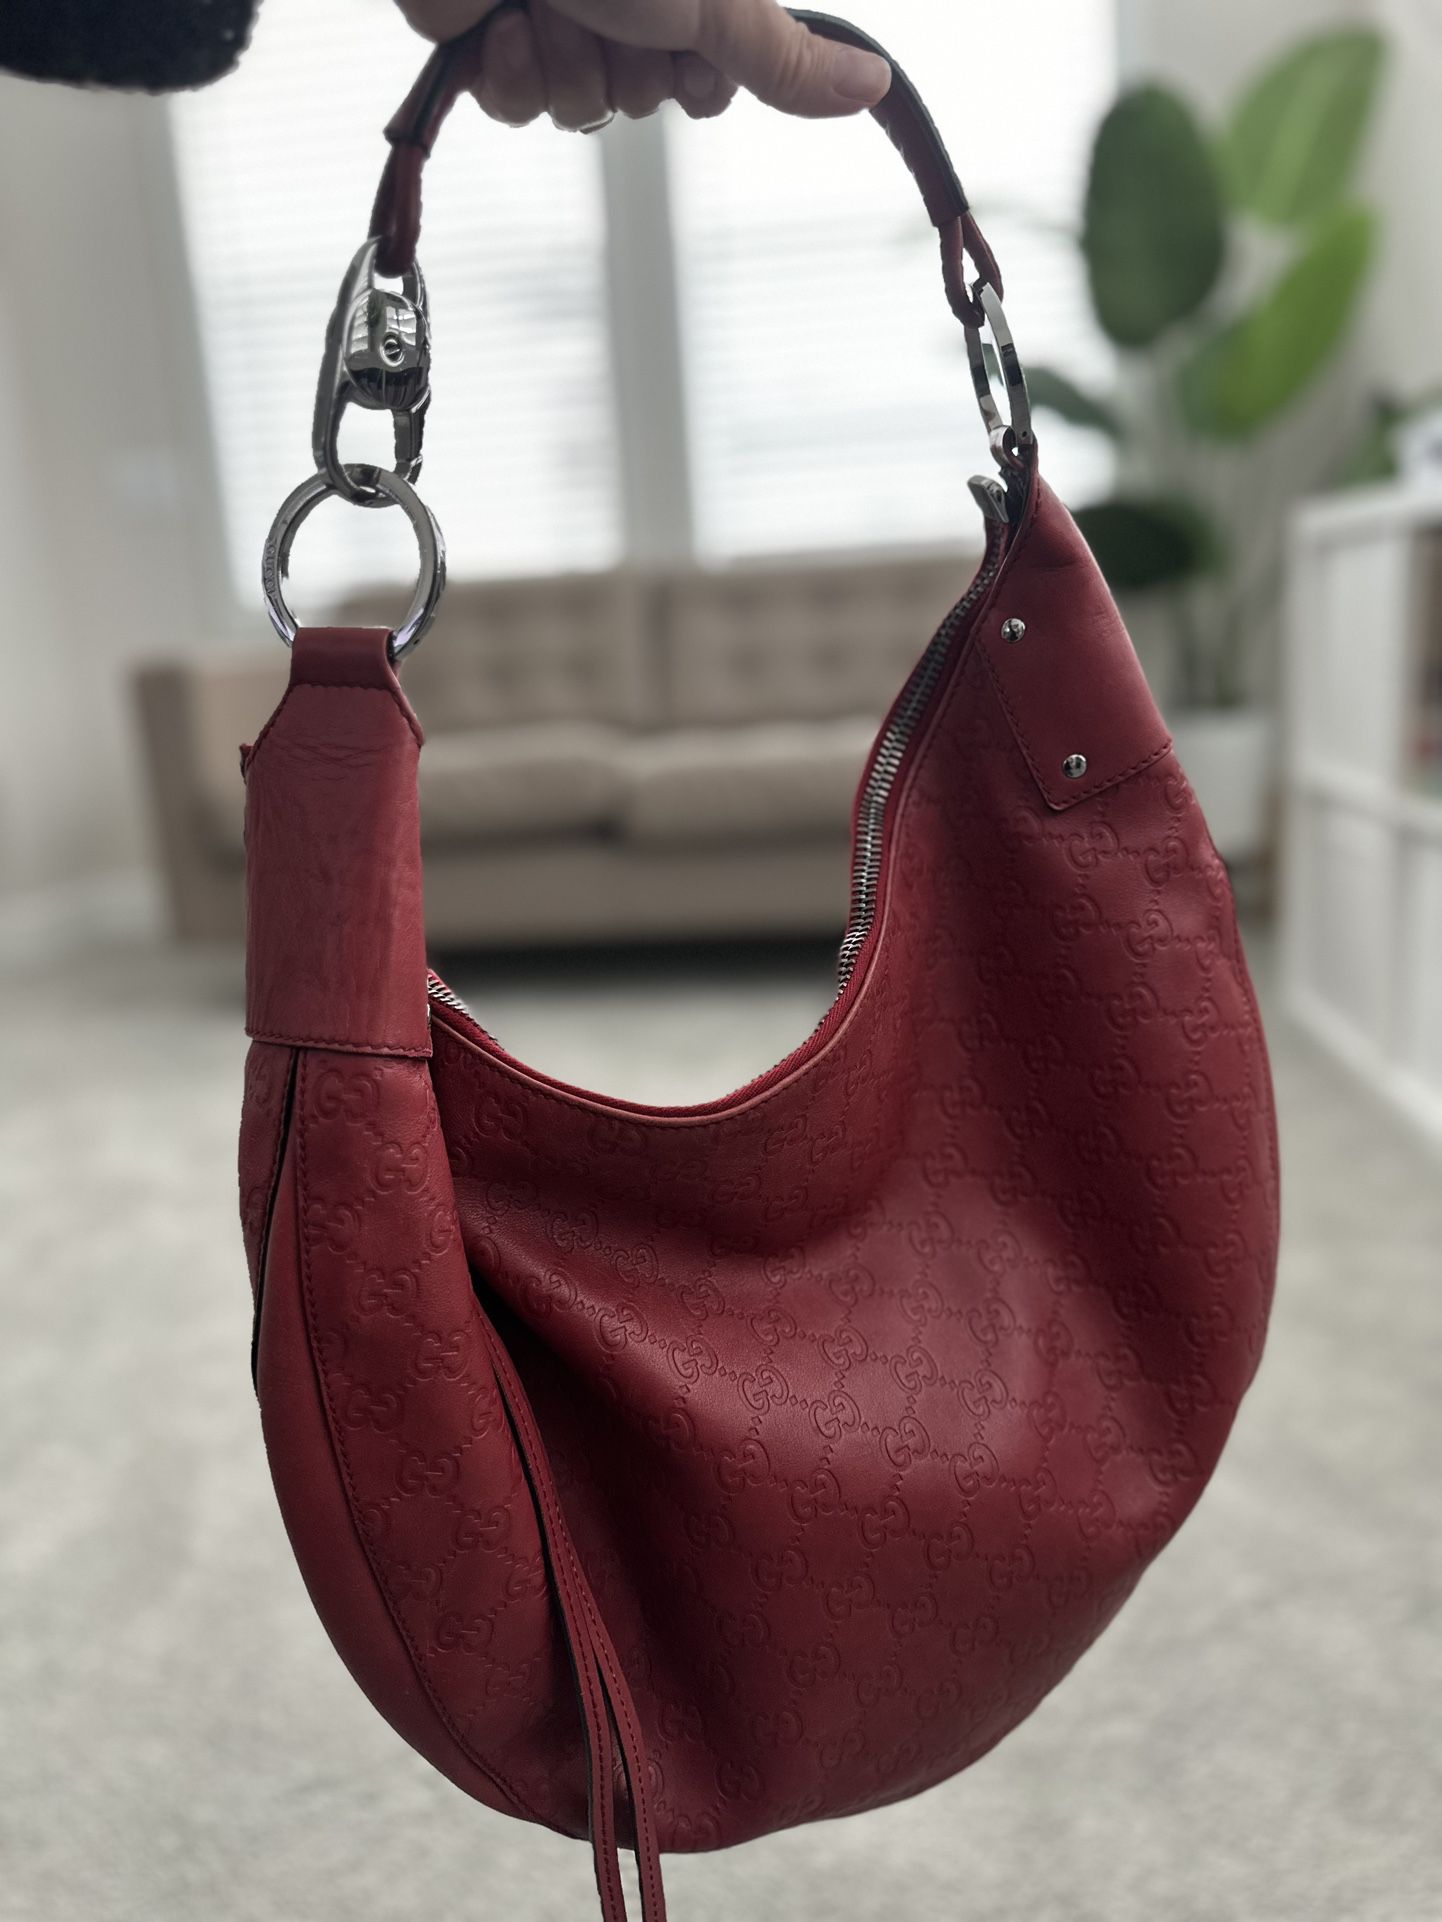 Gucci Red Wine Red Guccissima Large Leather Bag Hobo Shoulder bag